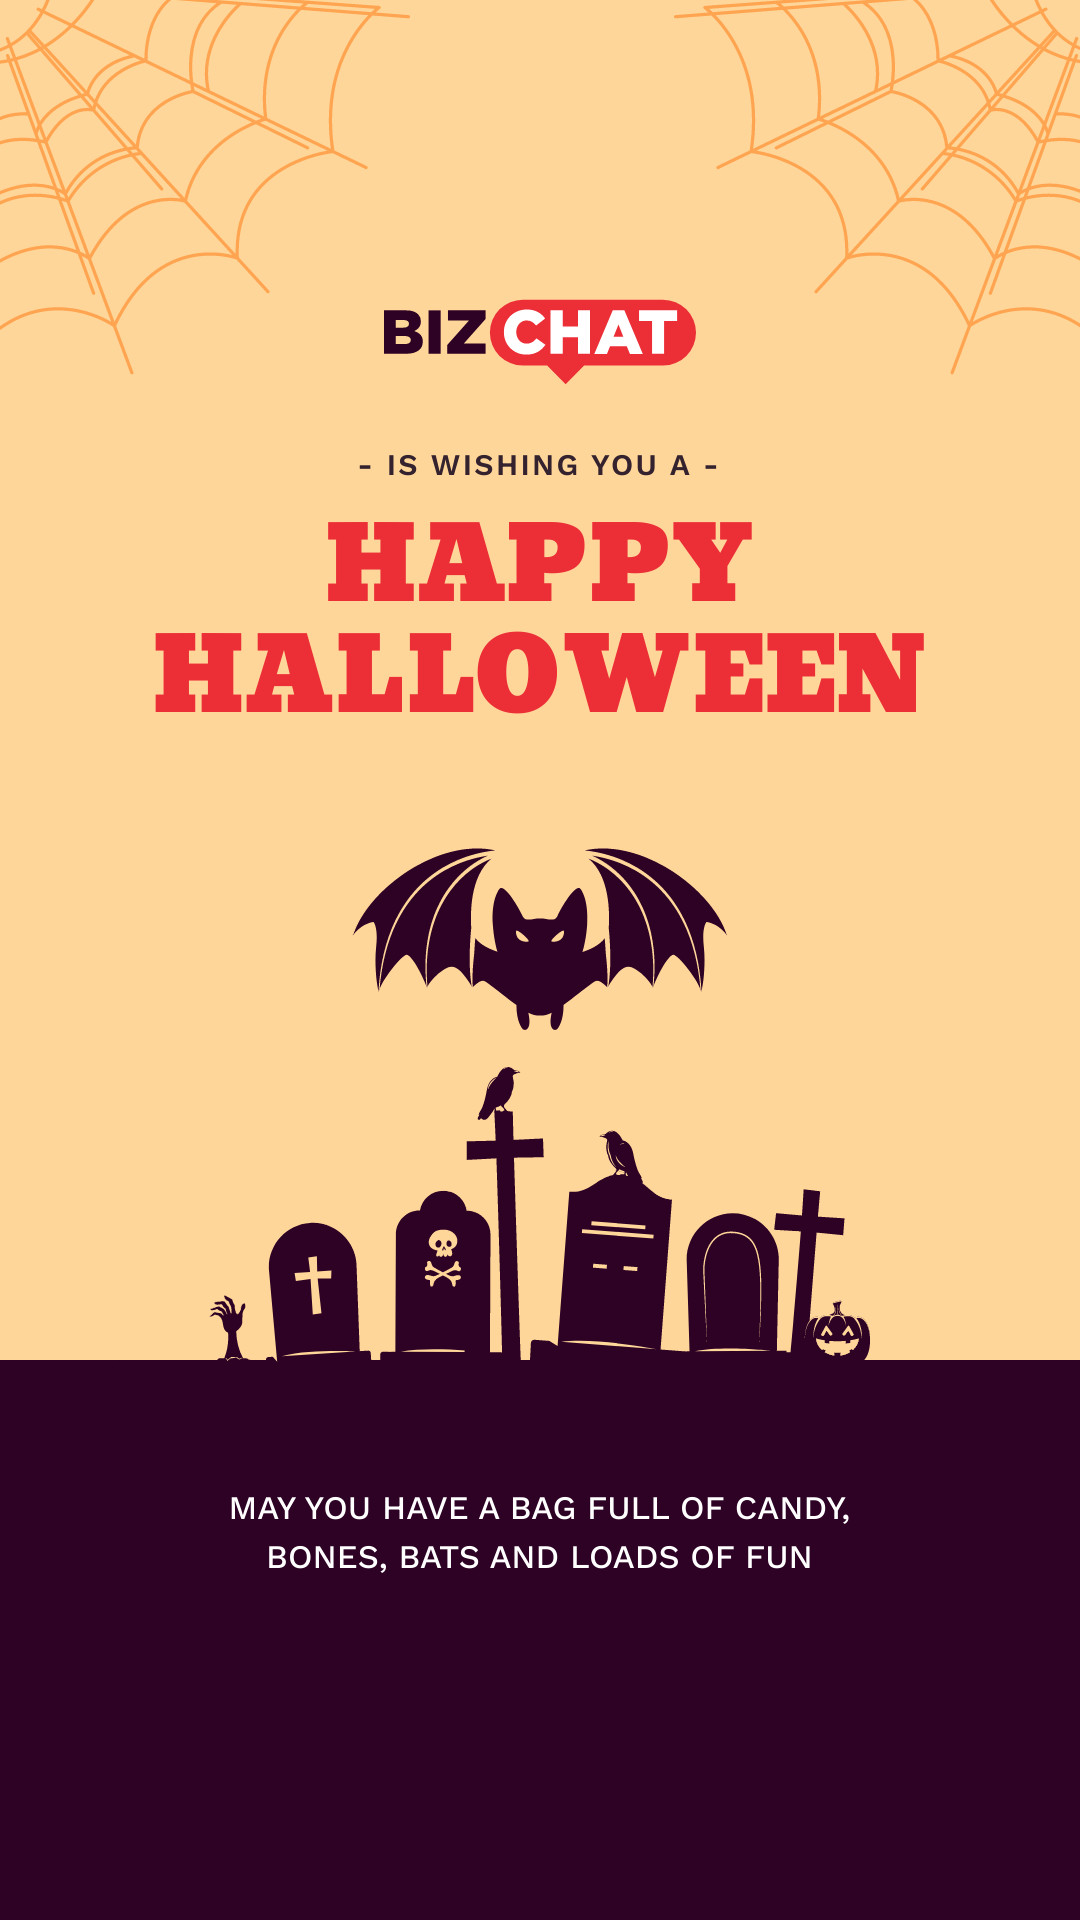 BizChat Wishing Happy Halloween 